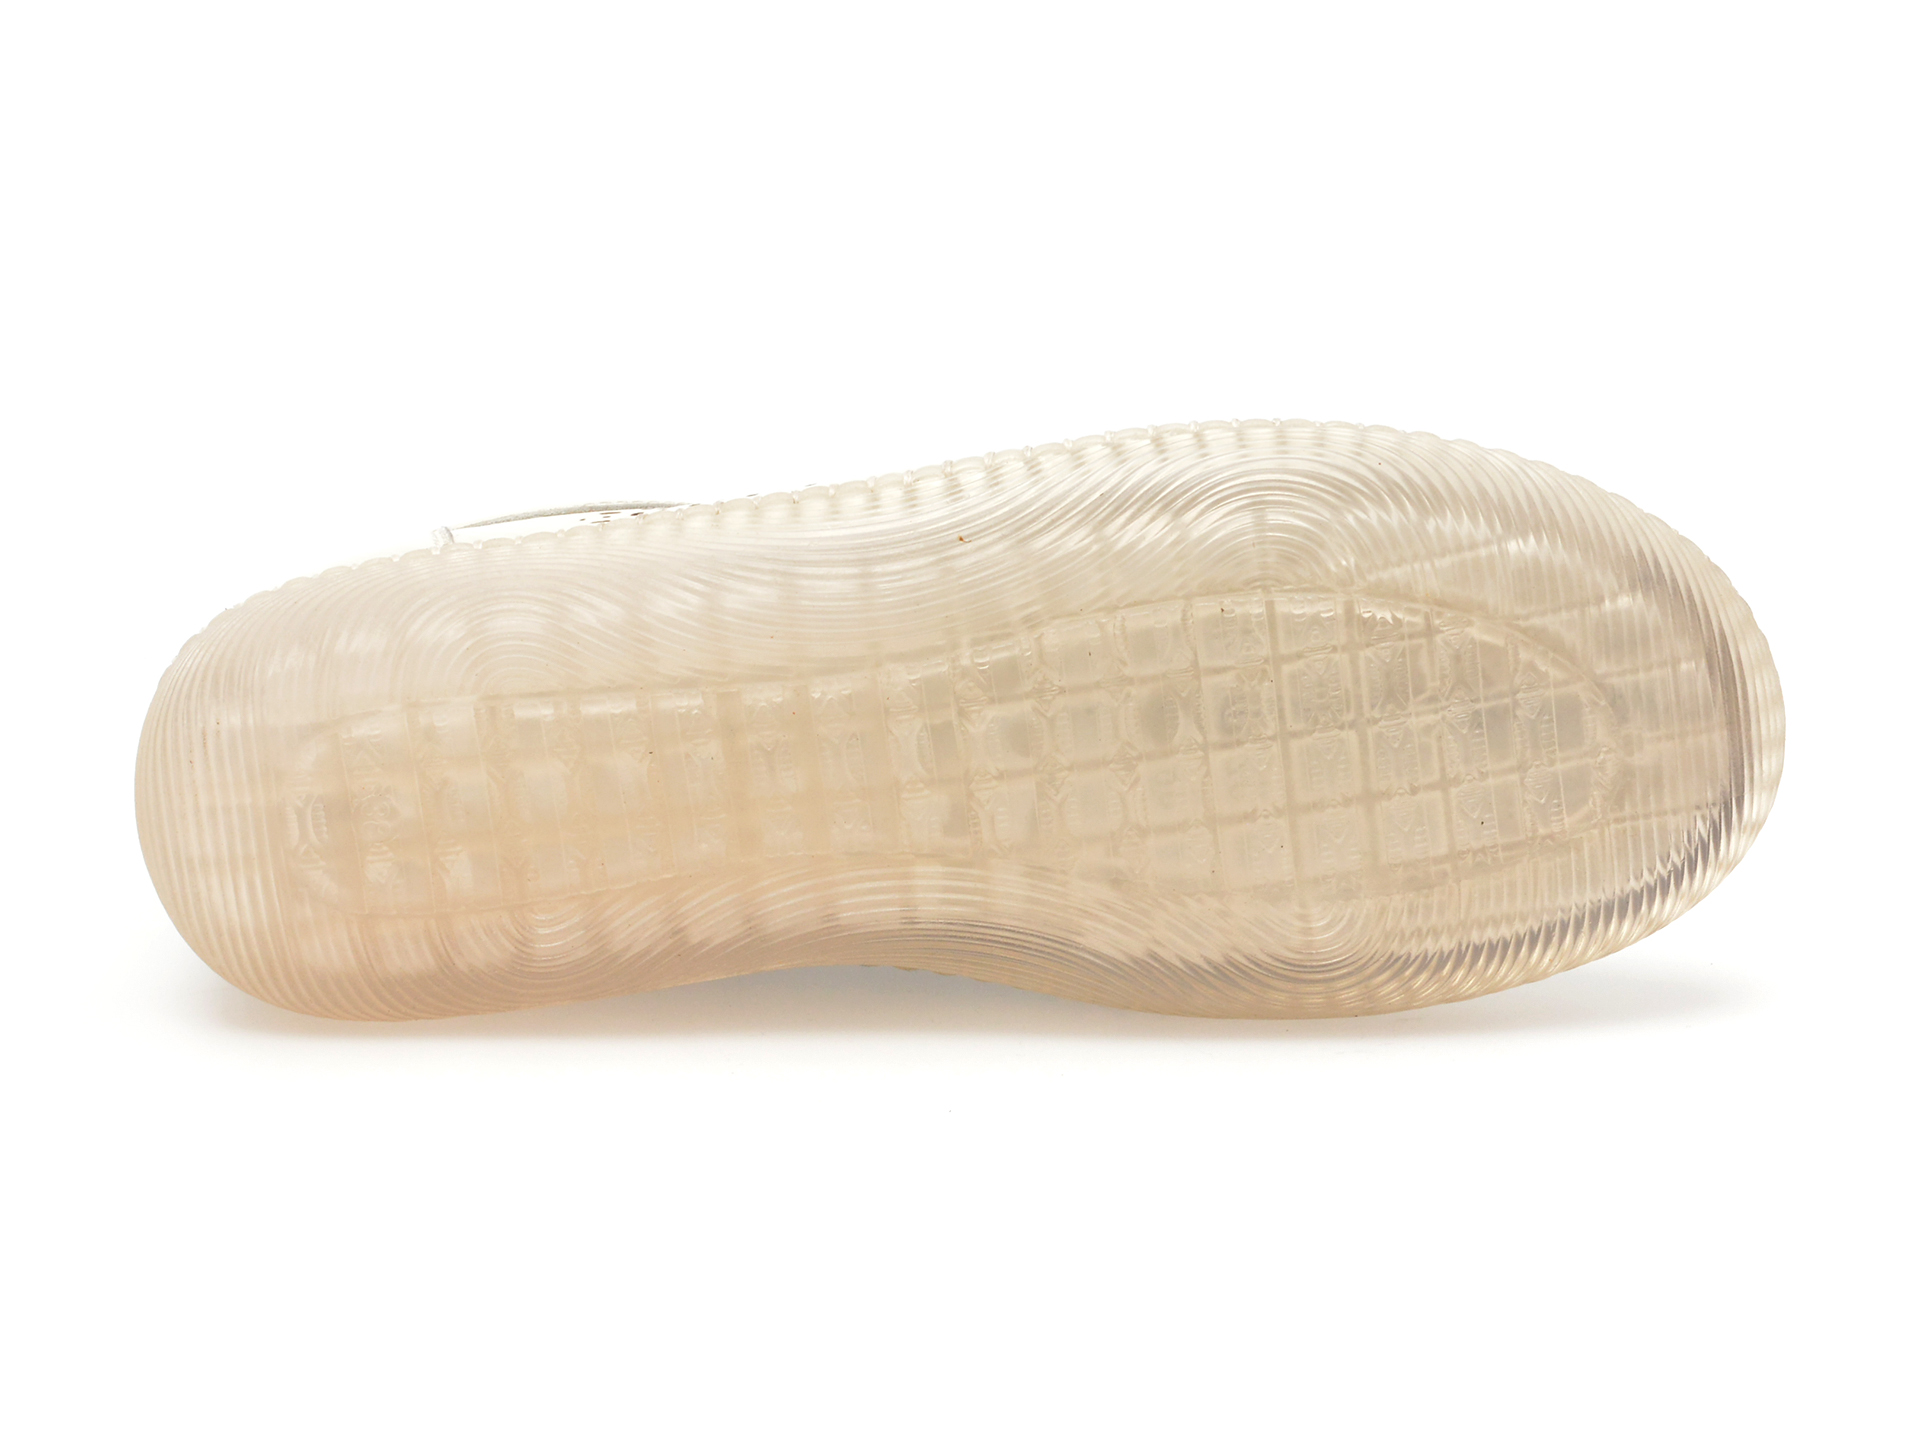 Pantofi OZIYS albi, 22109, din piele naturala